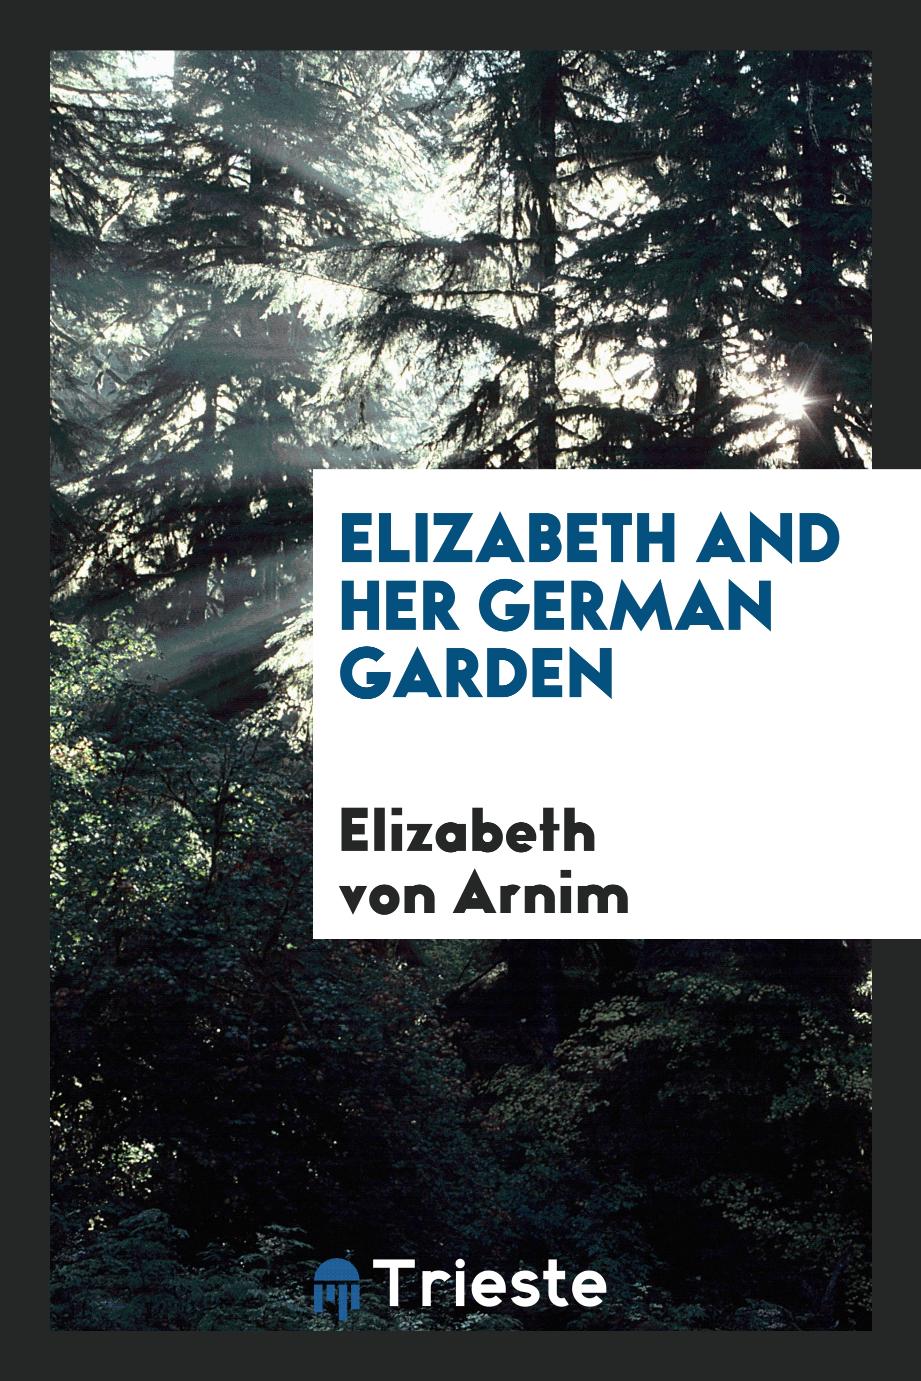 Elizabeth and her German garden